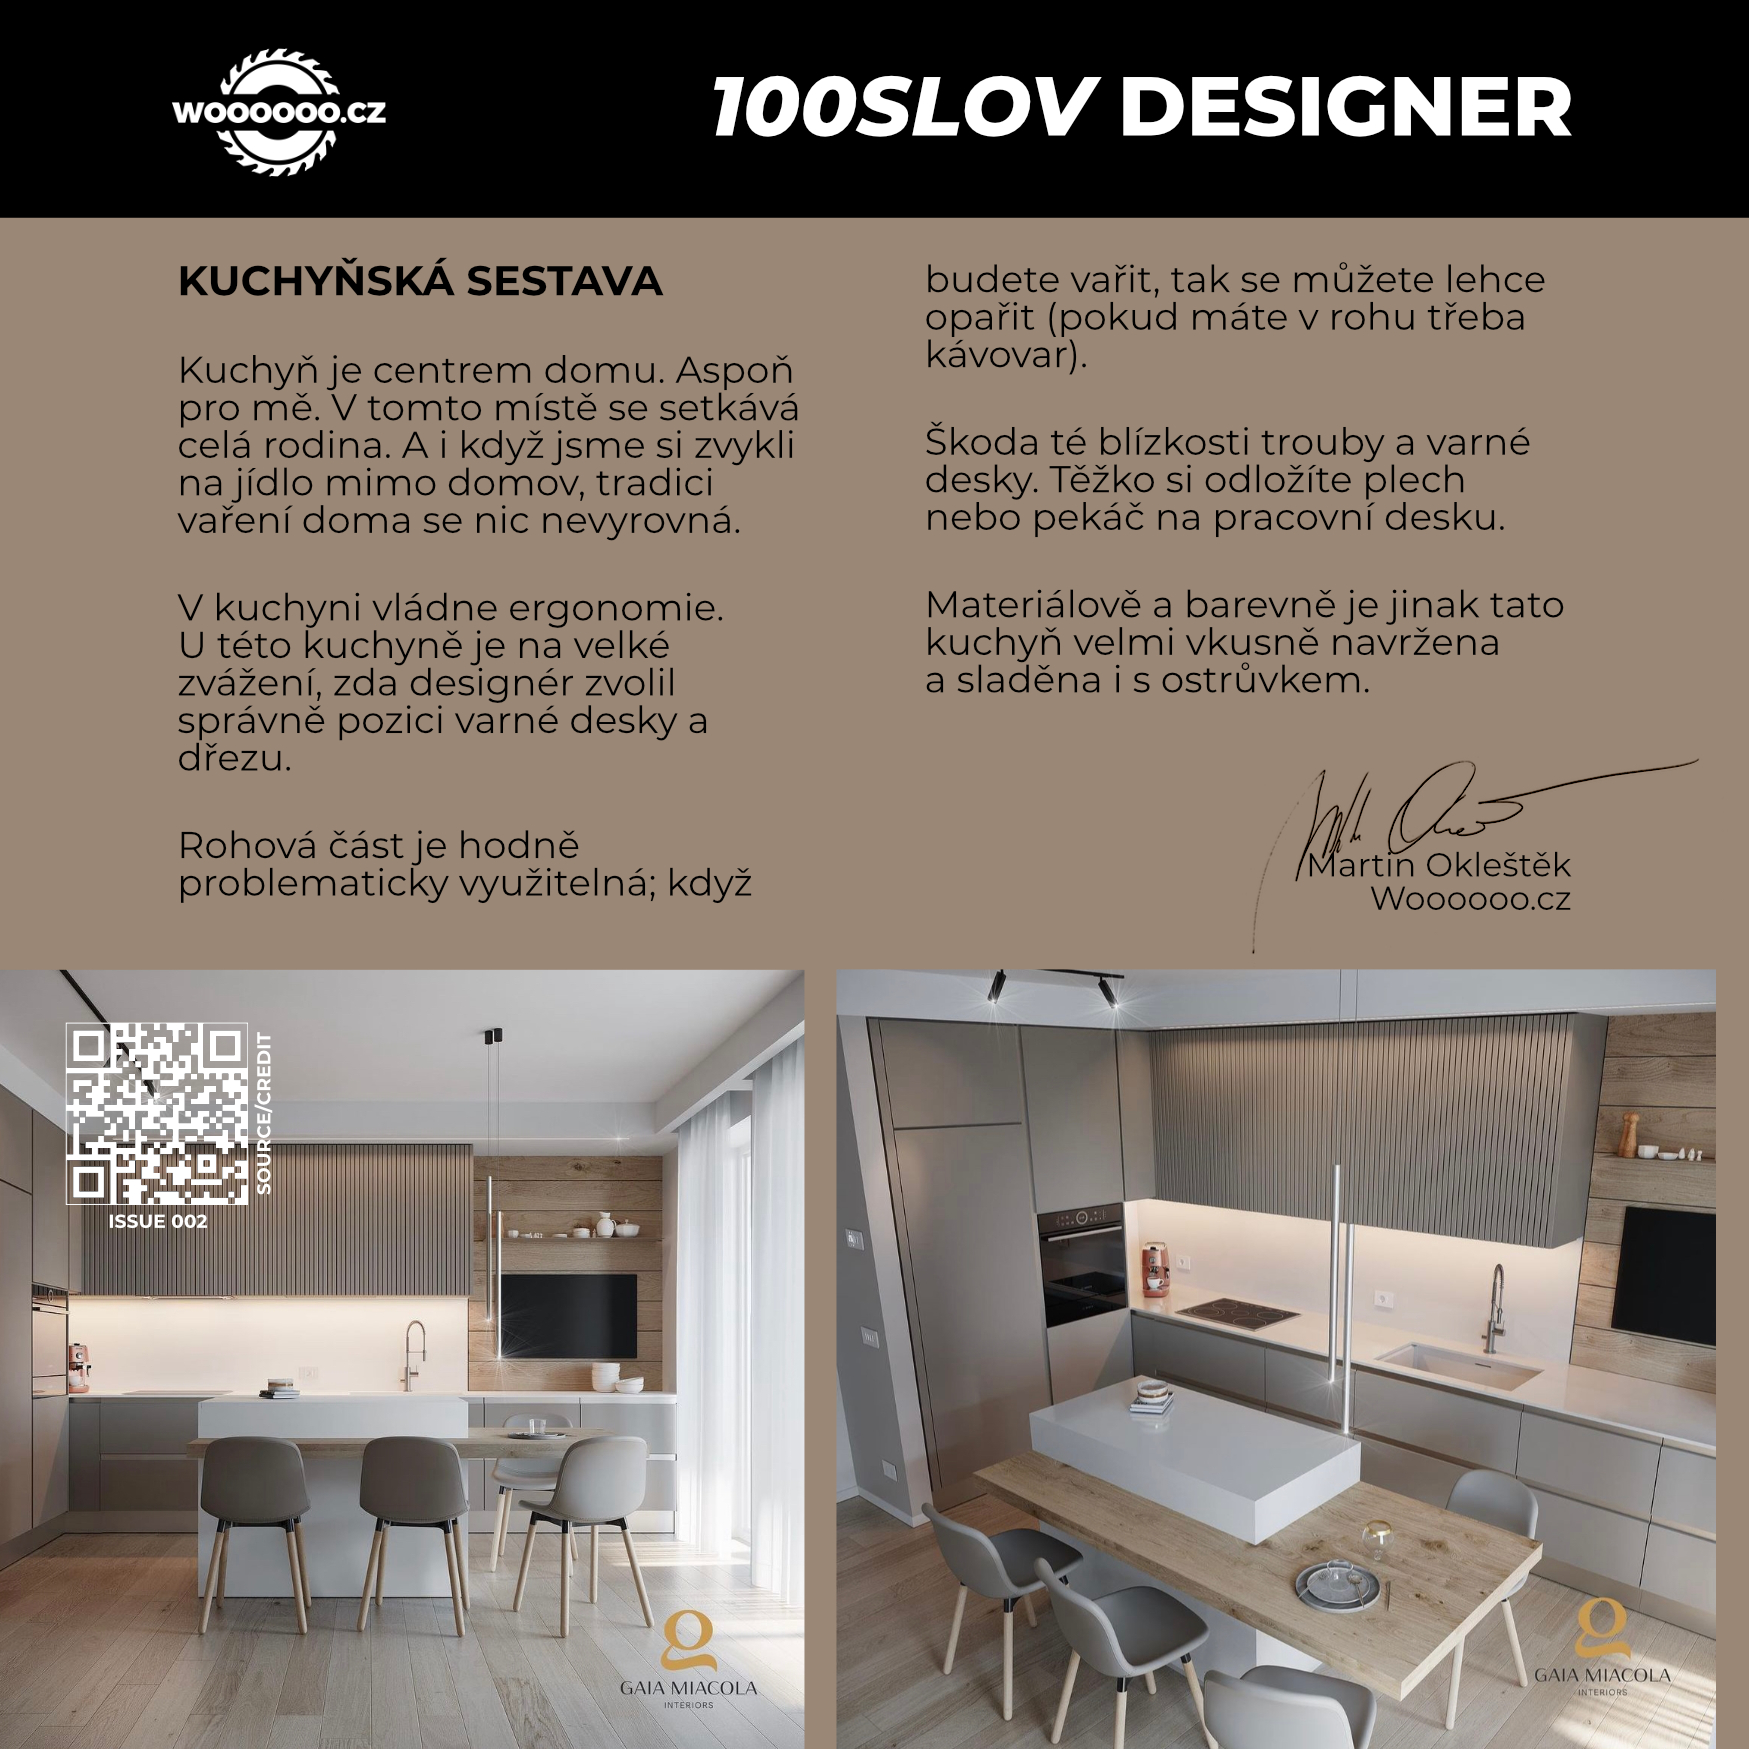 100SLOV designer Woooooo.cz zakázková výroba nábytku